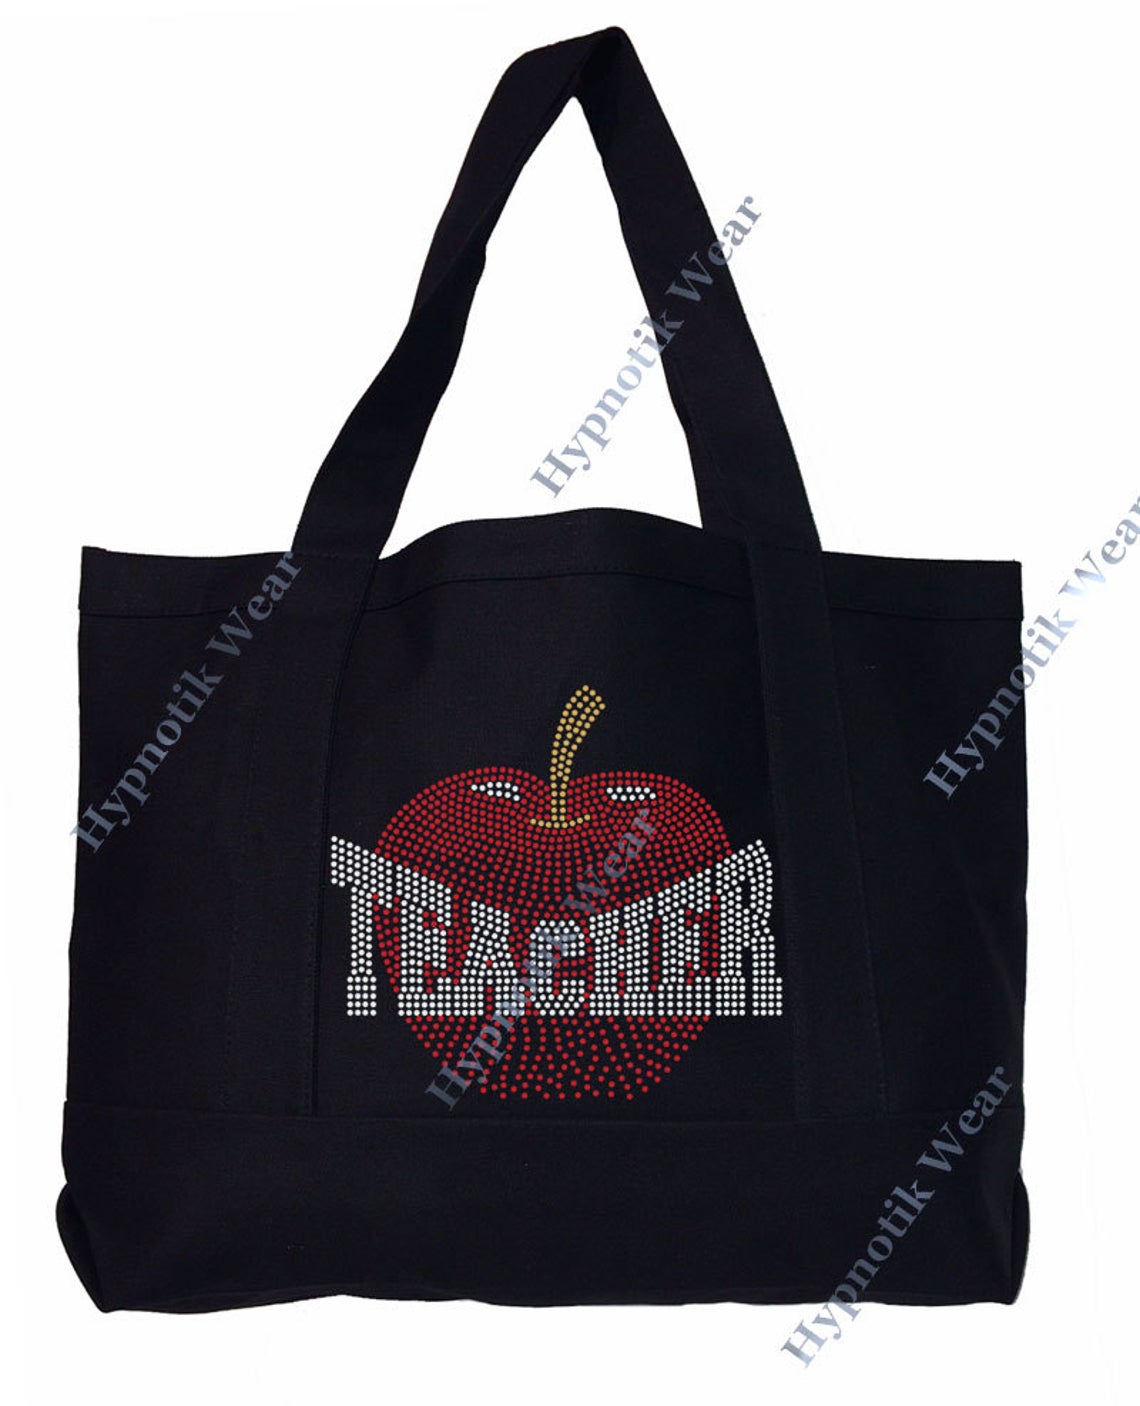 Rhinestone Sturdy Tote Bag with Zipper & Front Pocket " Teacher gift "  Bling